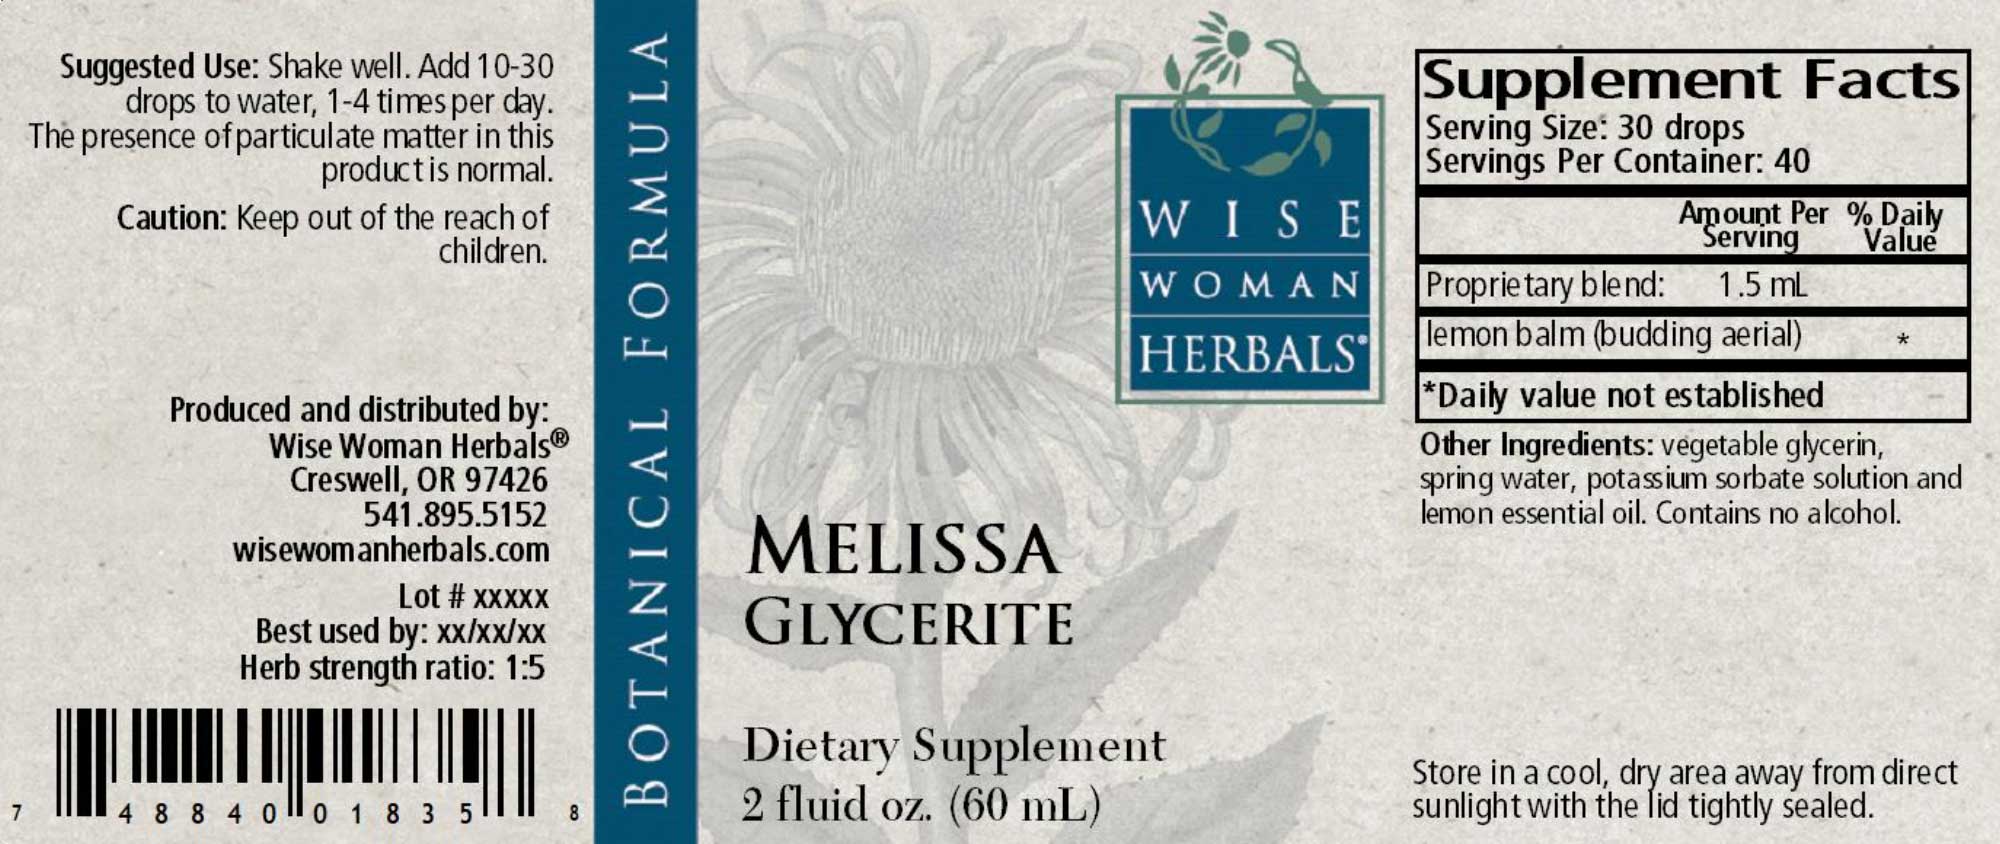 Wise Woman Herbals Melissa Glycerite Label